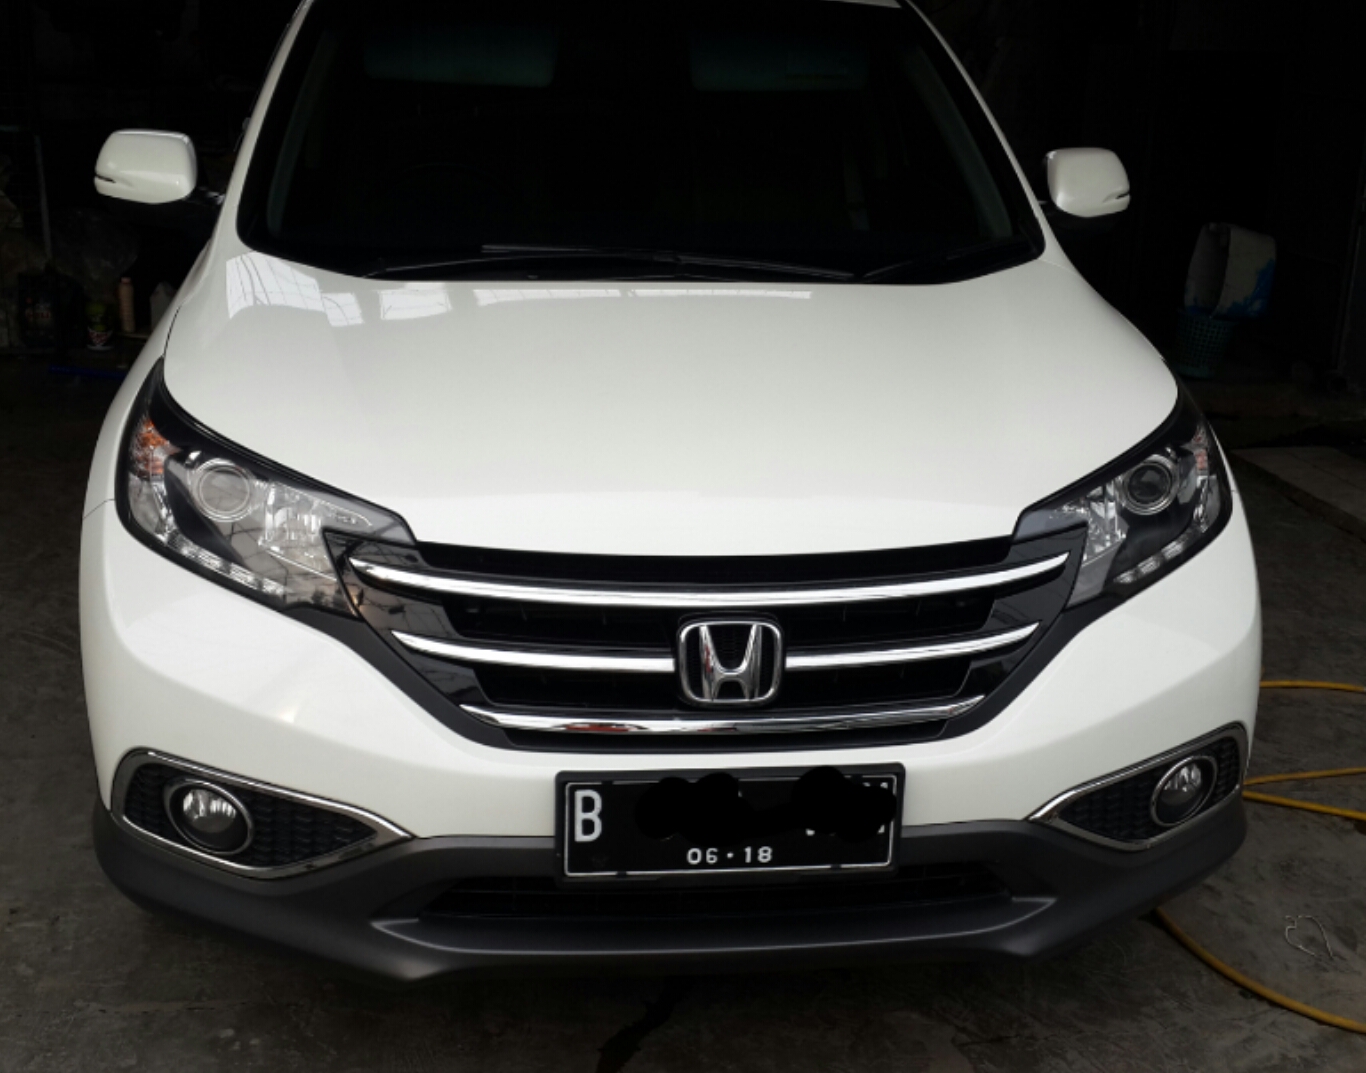 Jual Honda CRV 2013 Putih 24 Cc CARI JUAL BELI MOBIL BEKAS MURAH